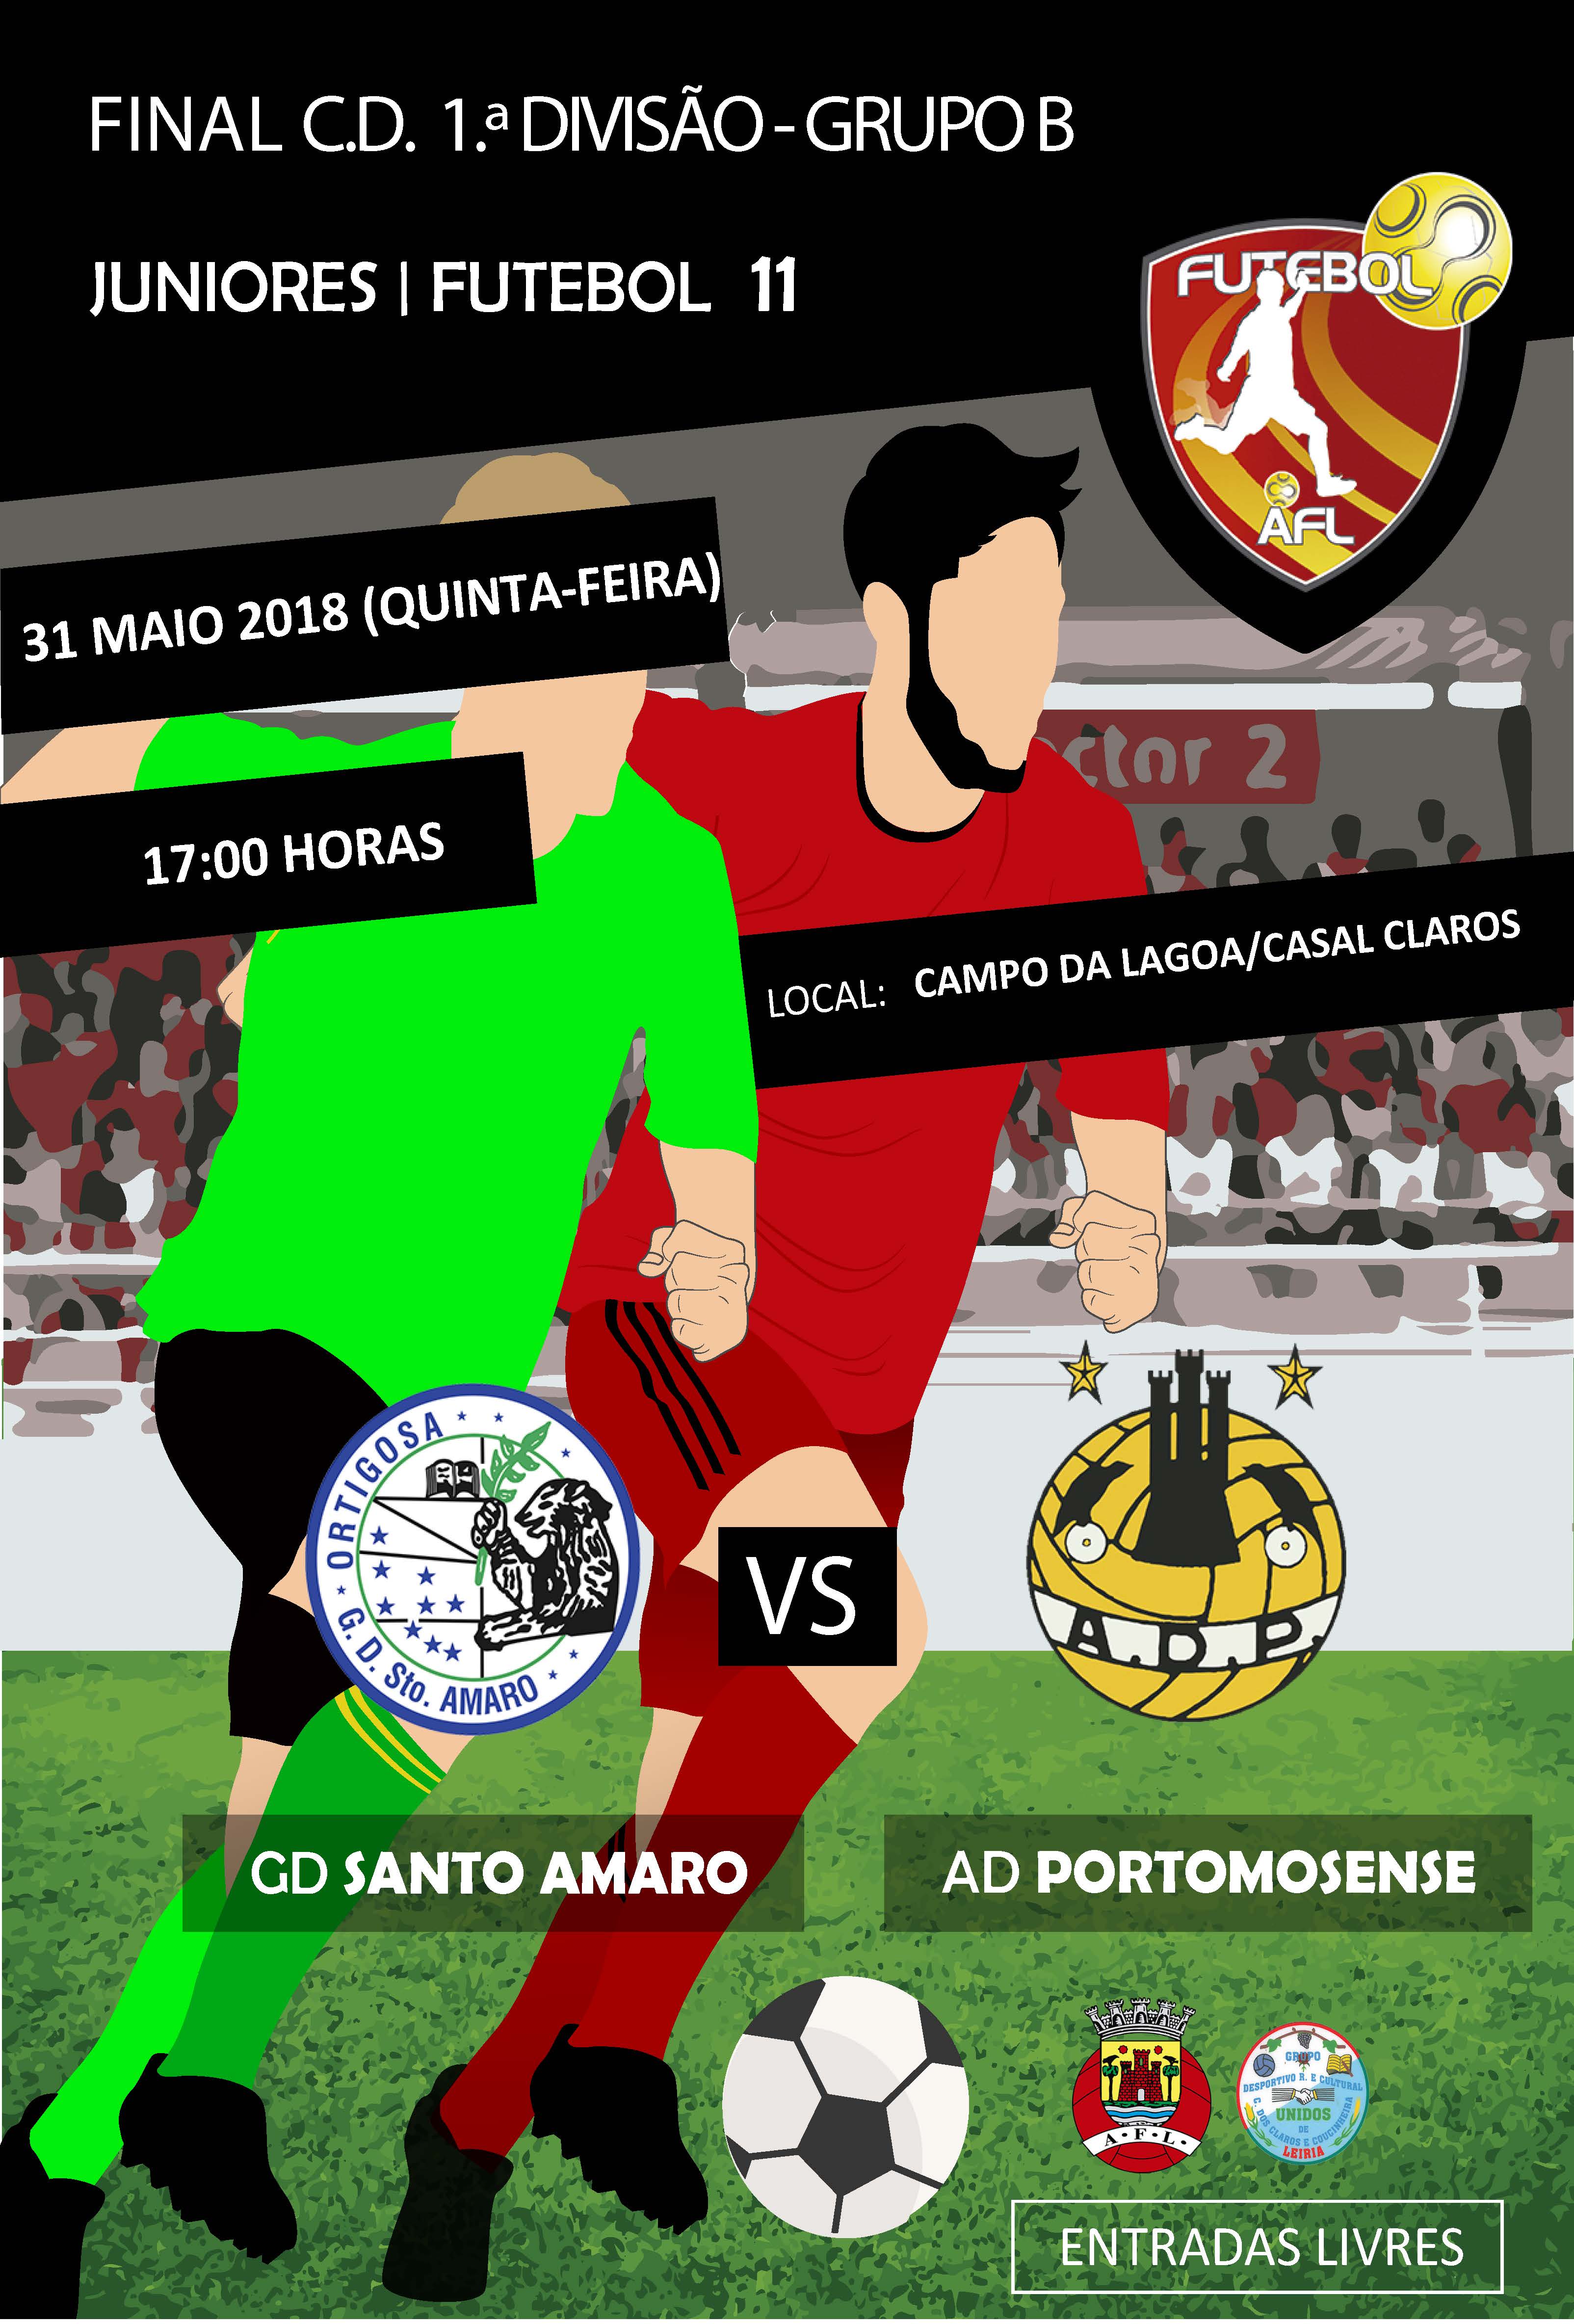 Campeonato Distrital 1ª Divisão - Juniores - Futebol 11!